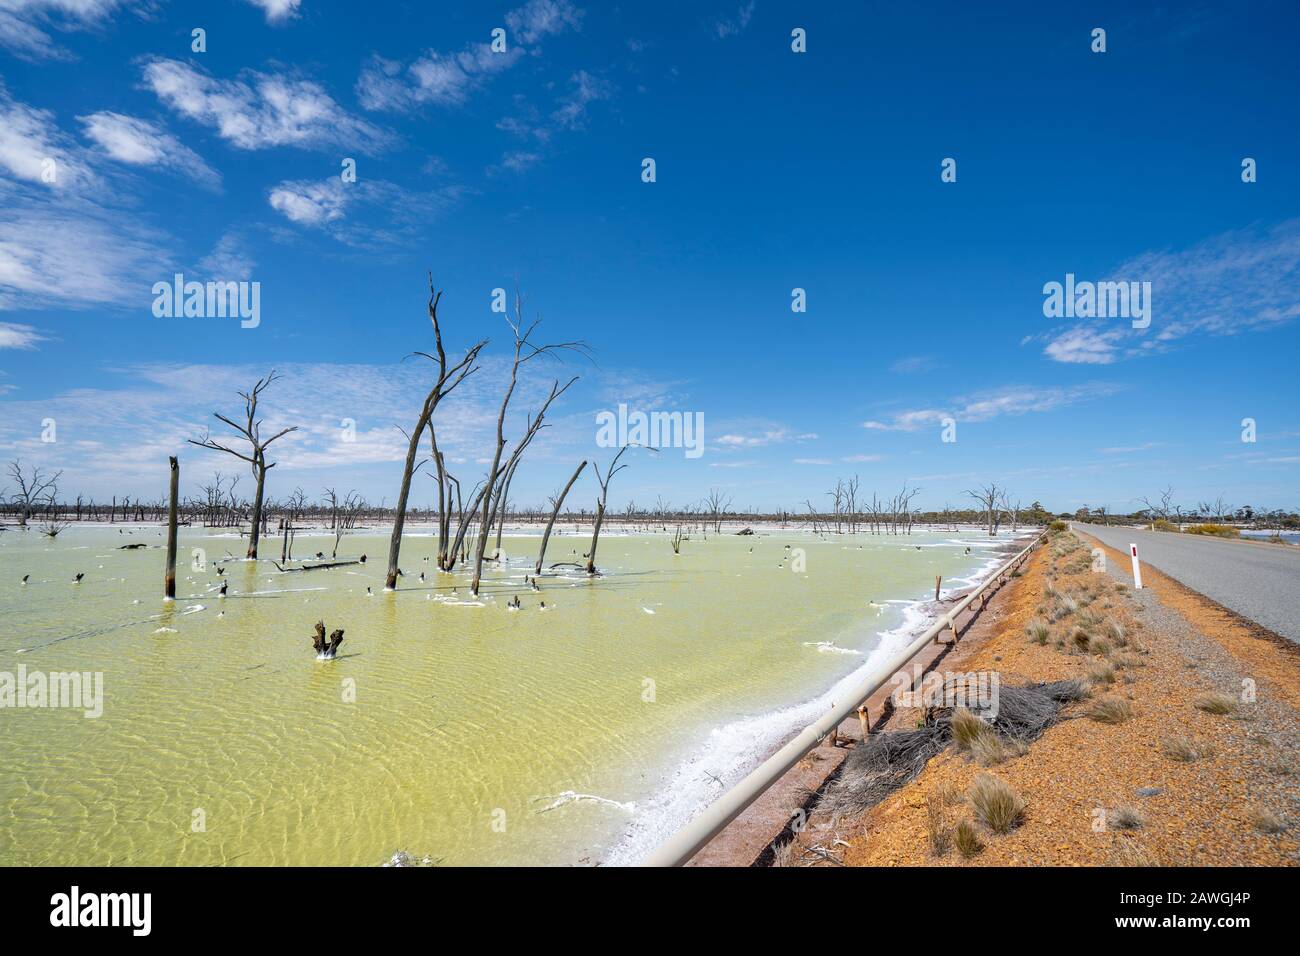 Dead tree trunks in Job Lake, a salt lake near Beacon, Western Australia Stock Photo